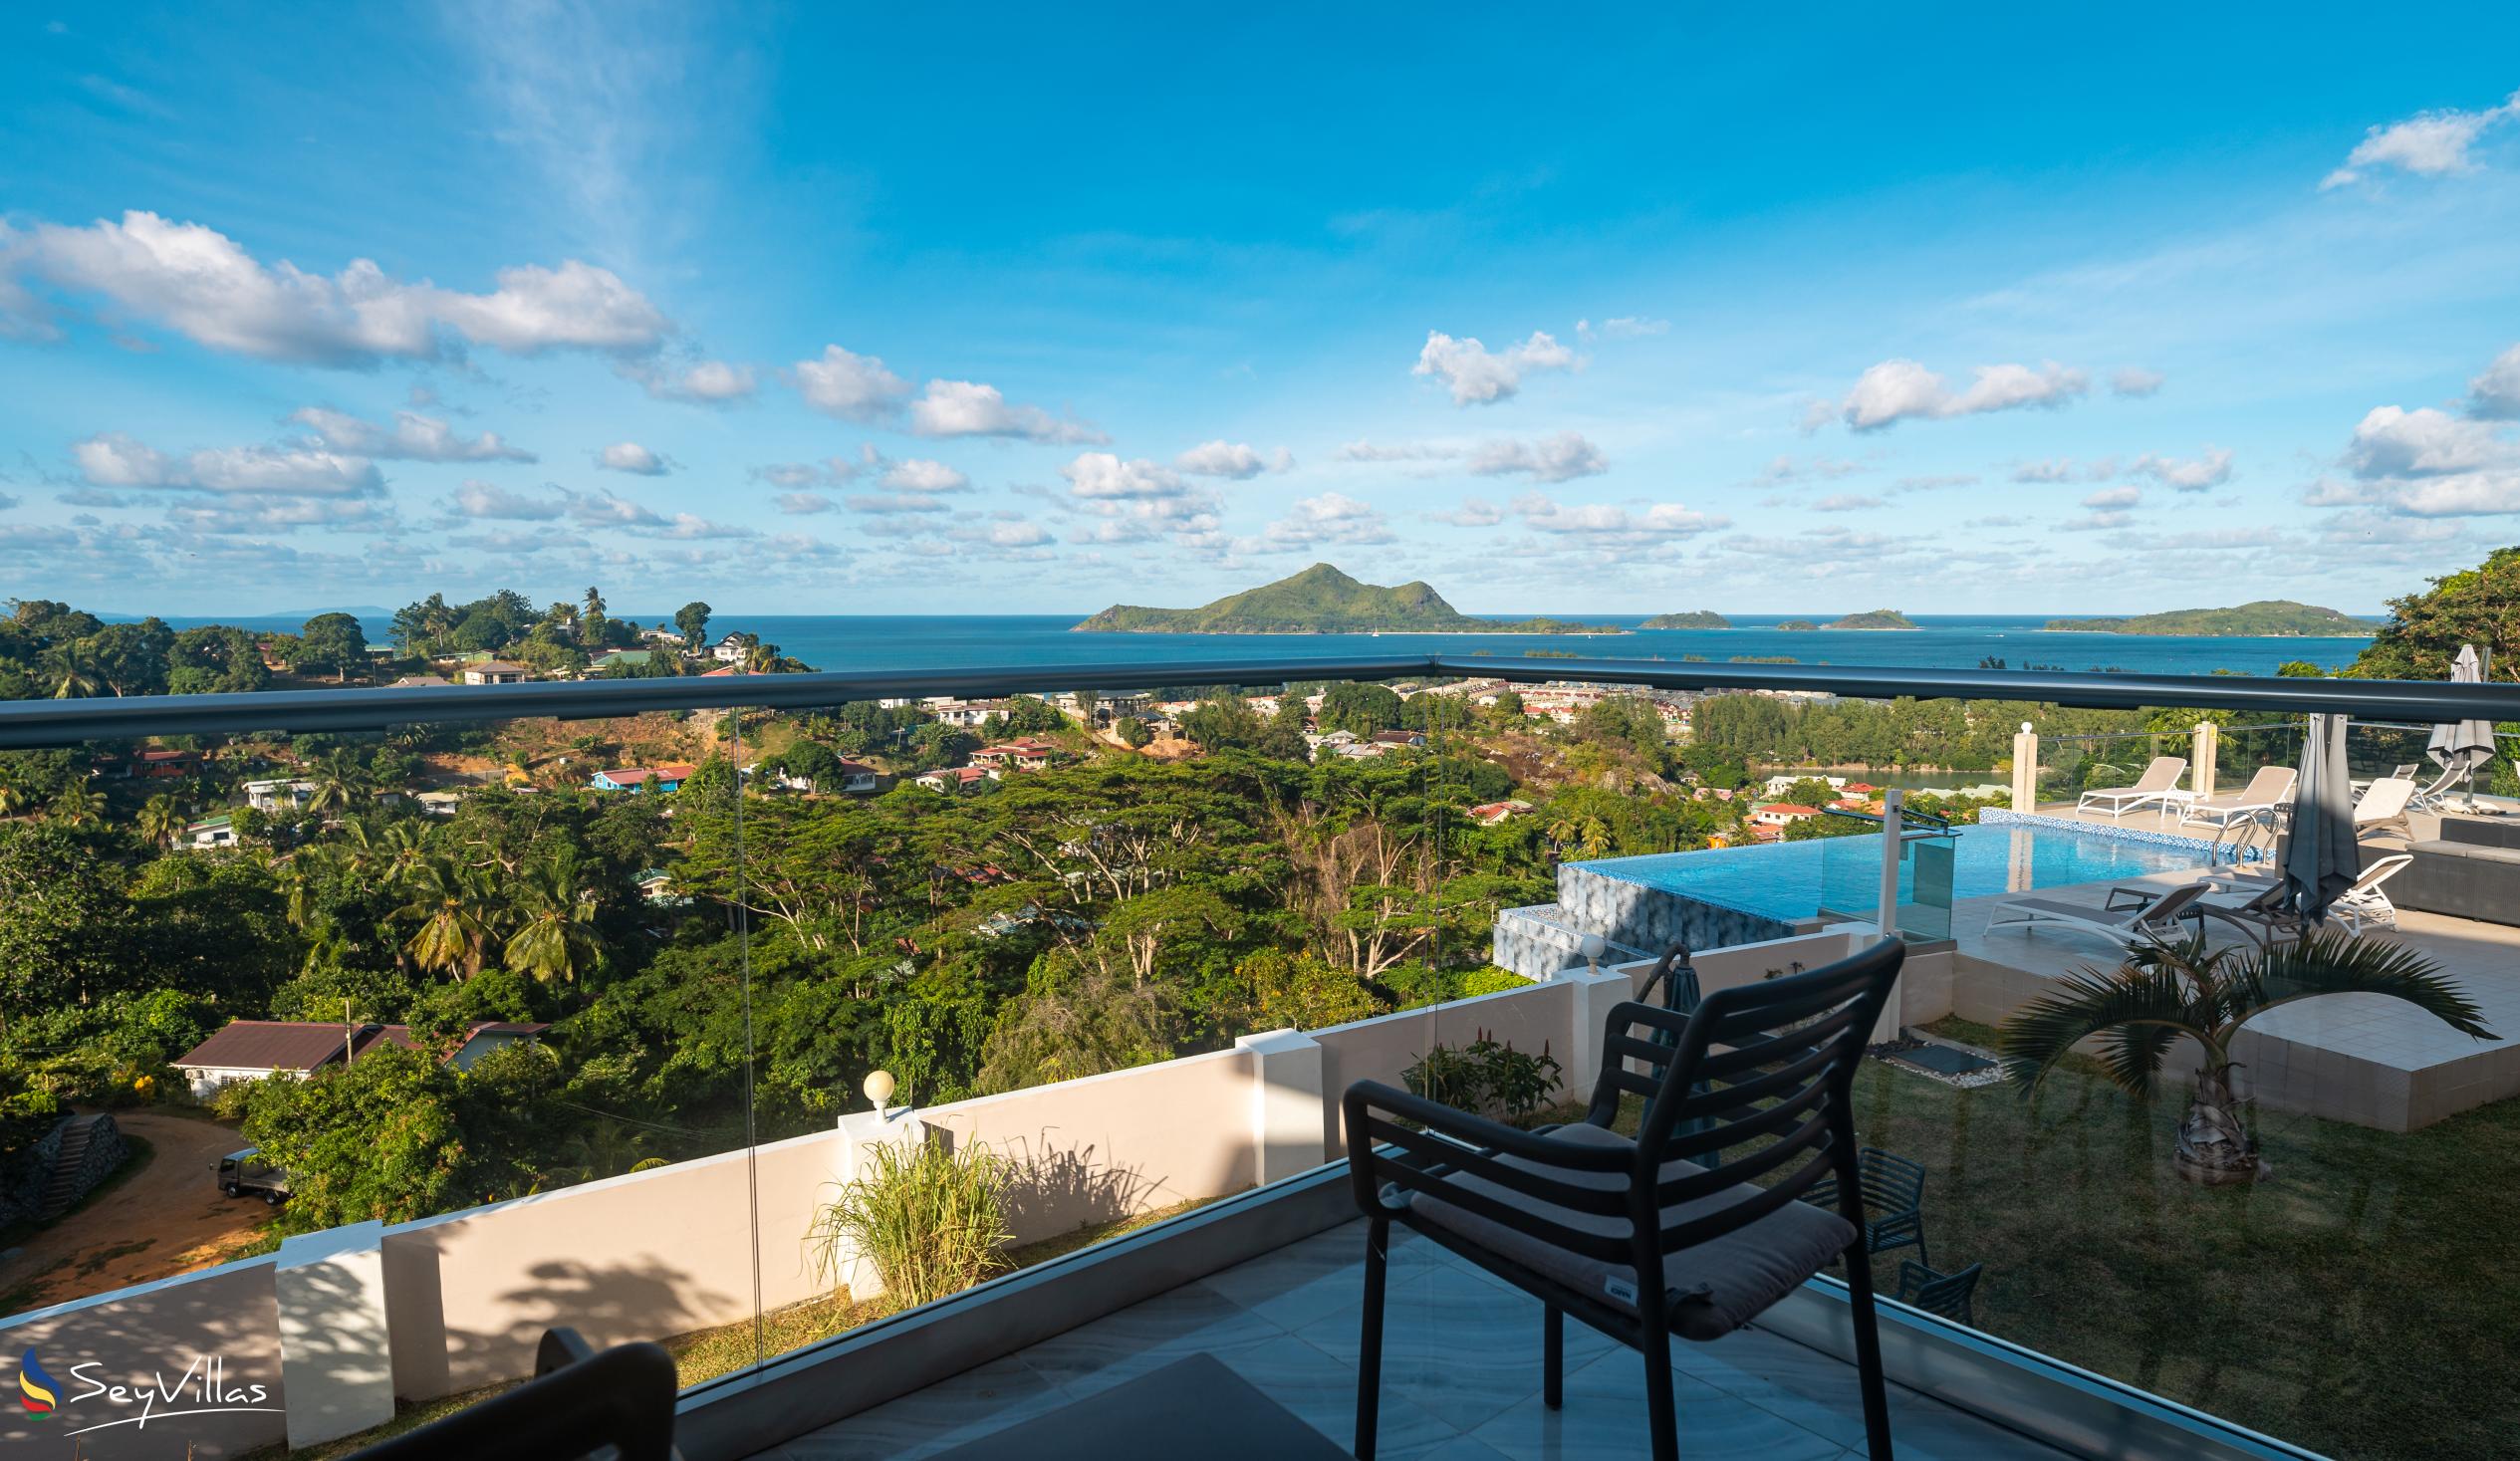 Foto 53: Maison L'Horizon - Appartamento con 1 camera Lalin - Mahé (Seychelles)